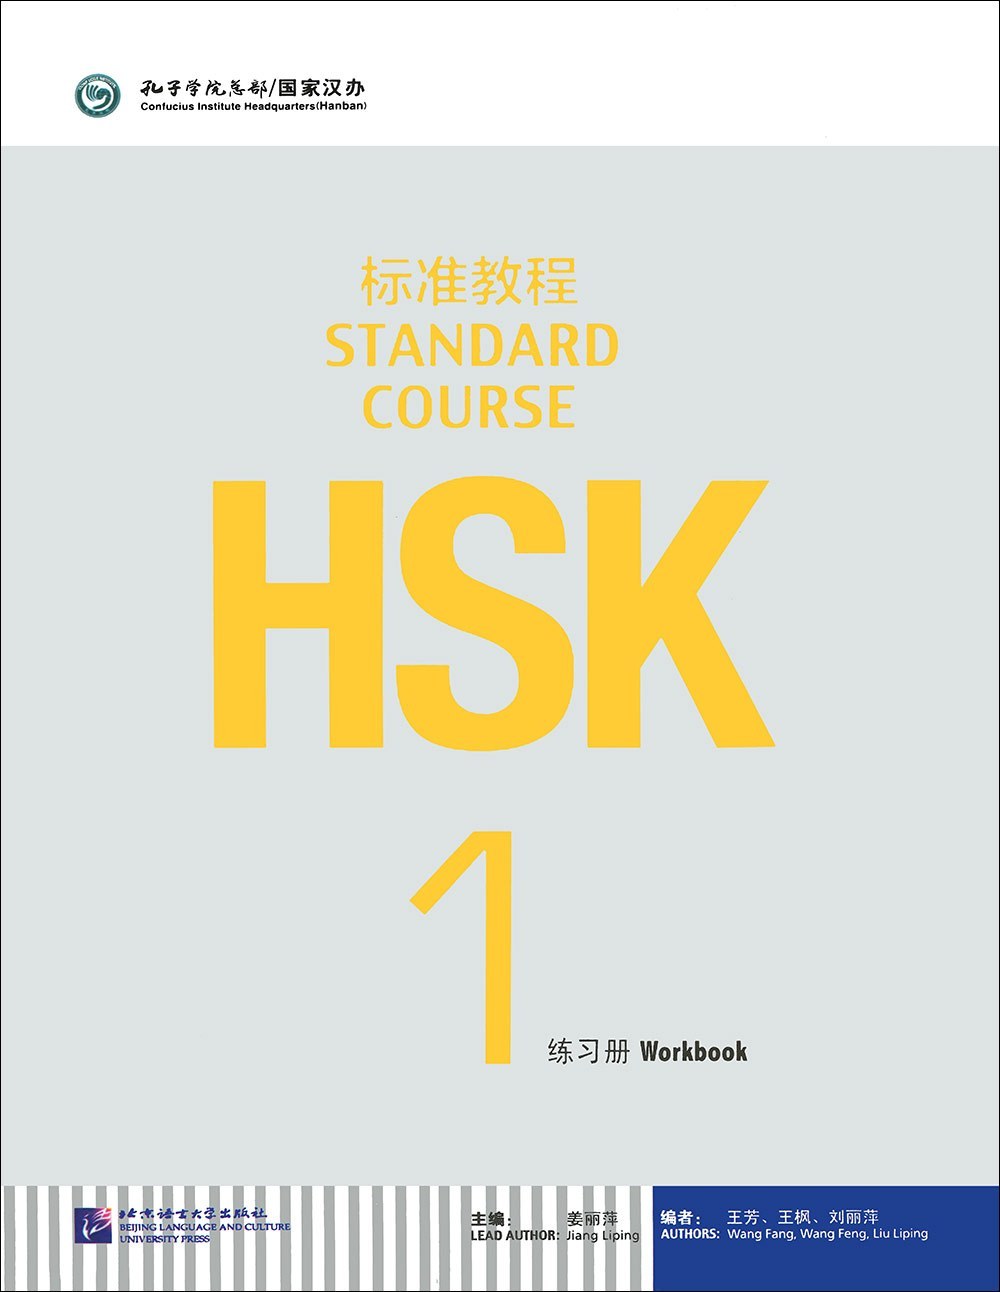 خرید و قیمت HSK Standard Course 1 (چاپ رنگی اندازه وزیری )